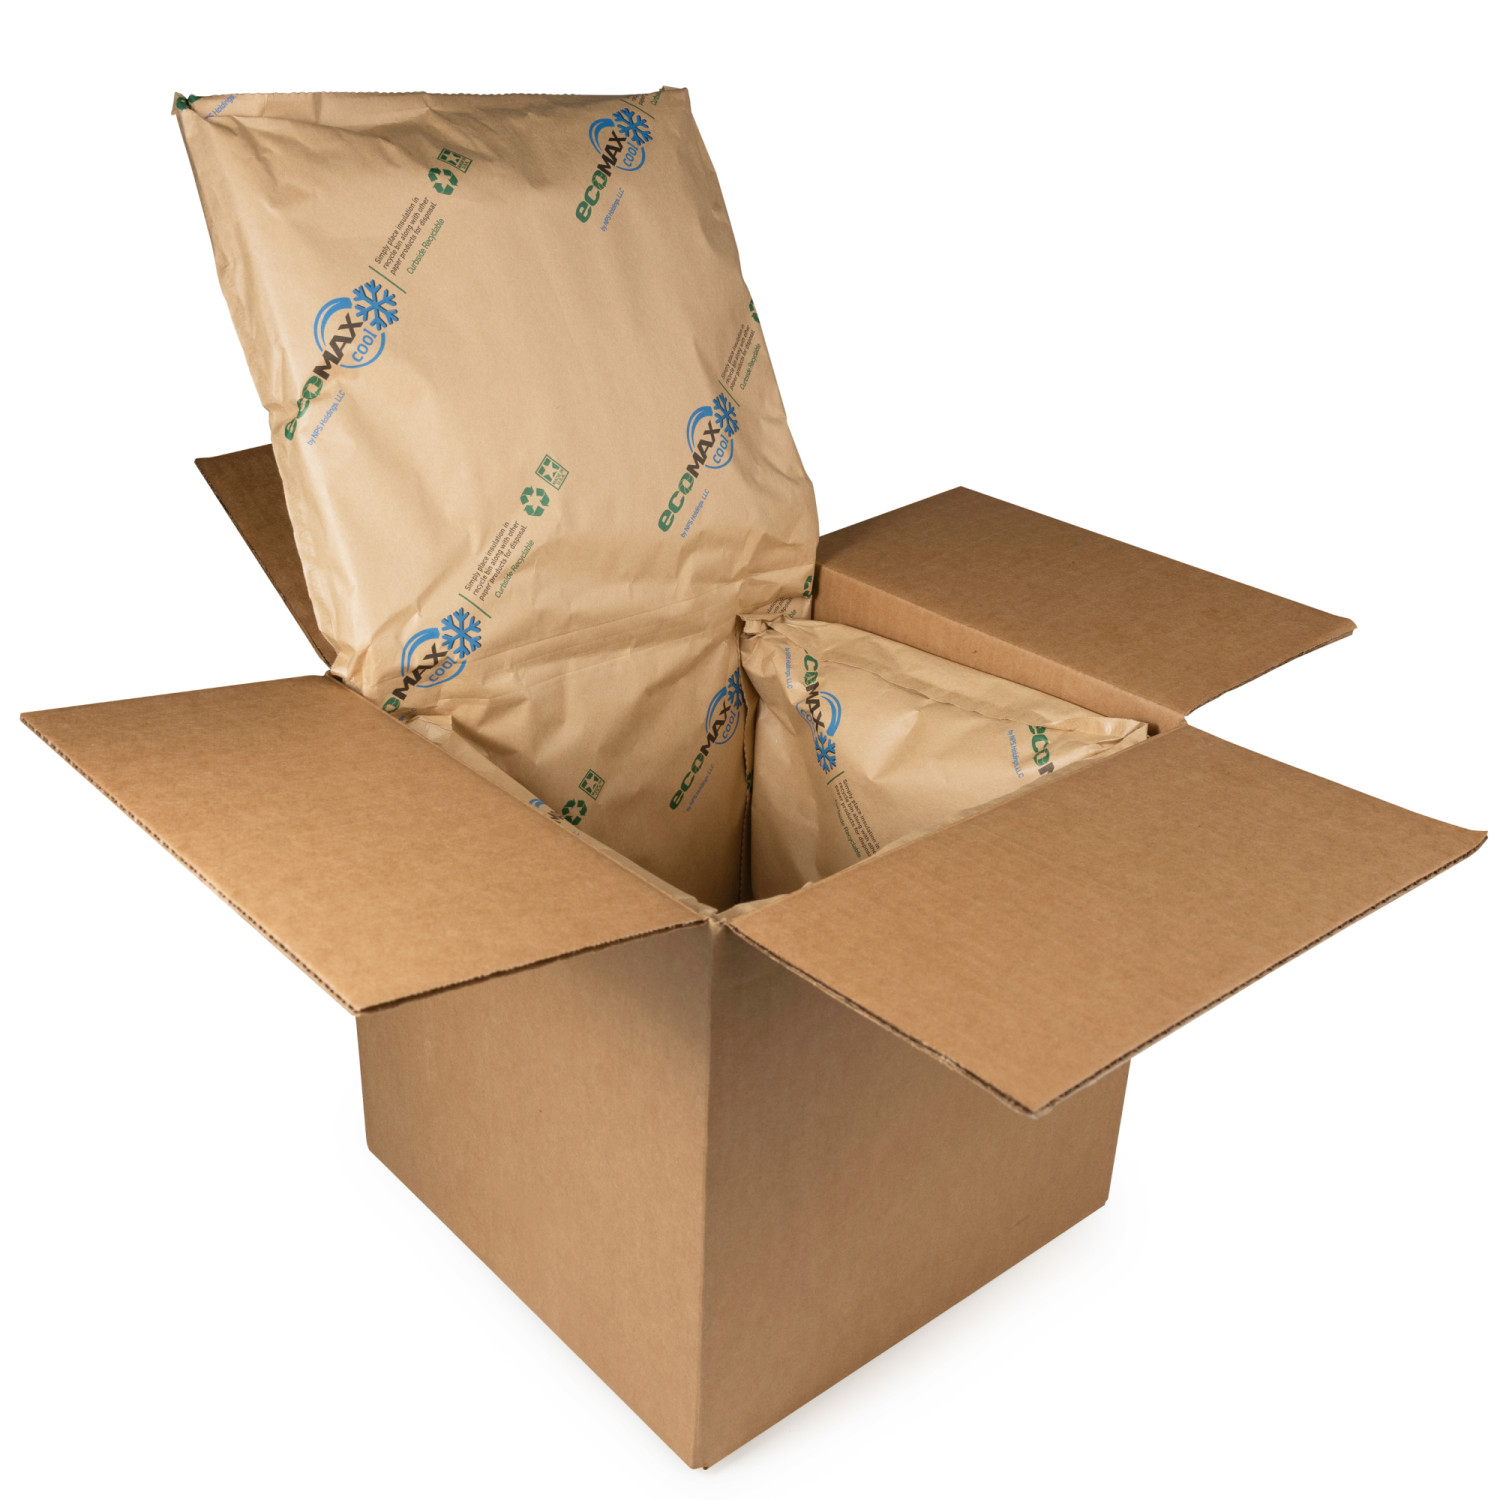 Shipping boxes - Cardboard box buy in stock in U.S. in IDL Packaging